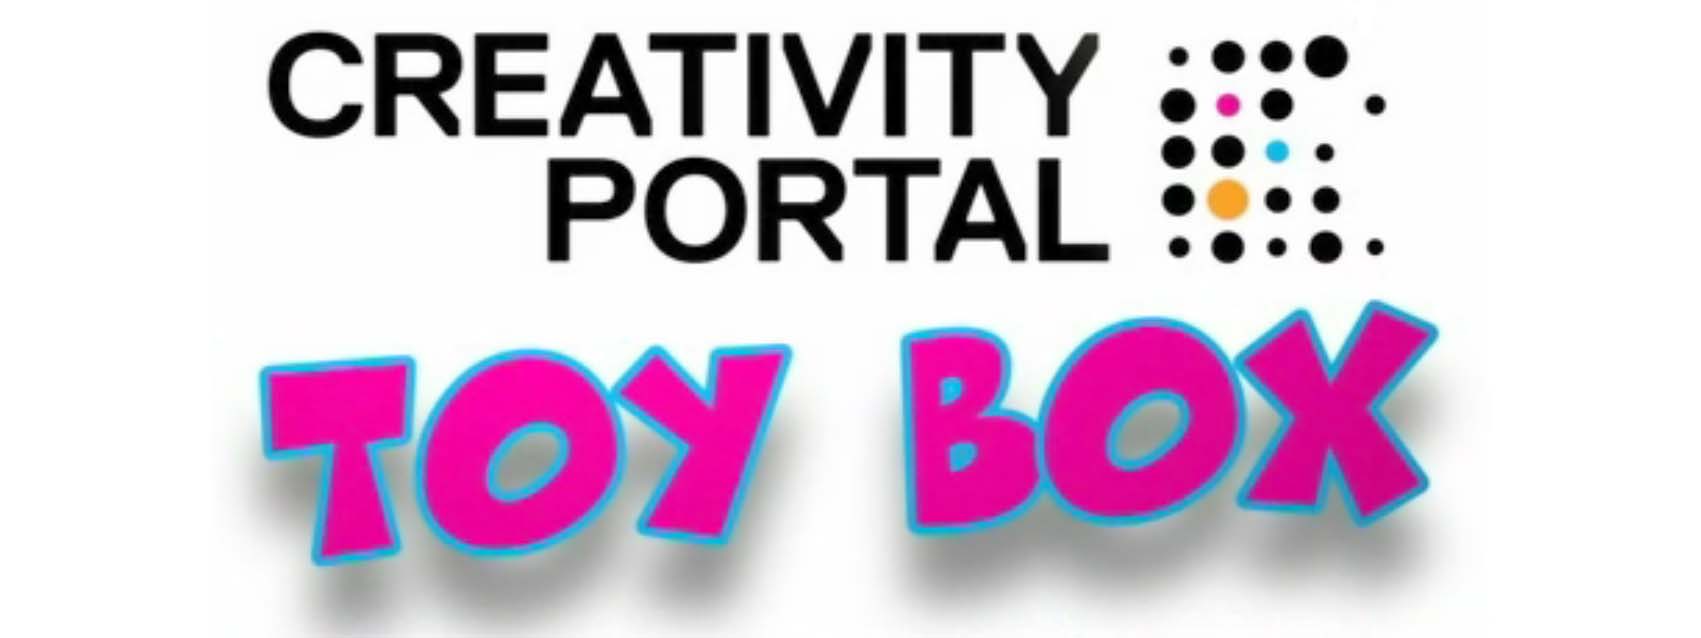 Creativity Toybox - Introduction